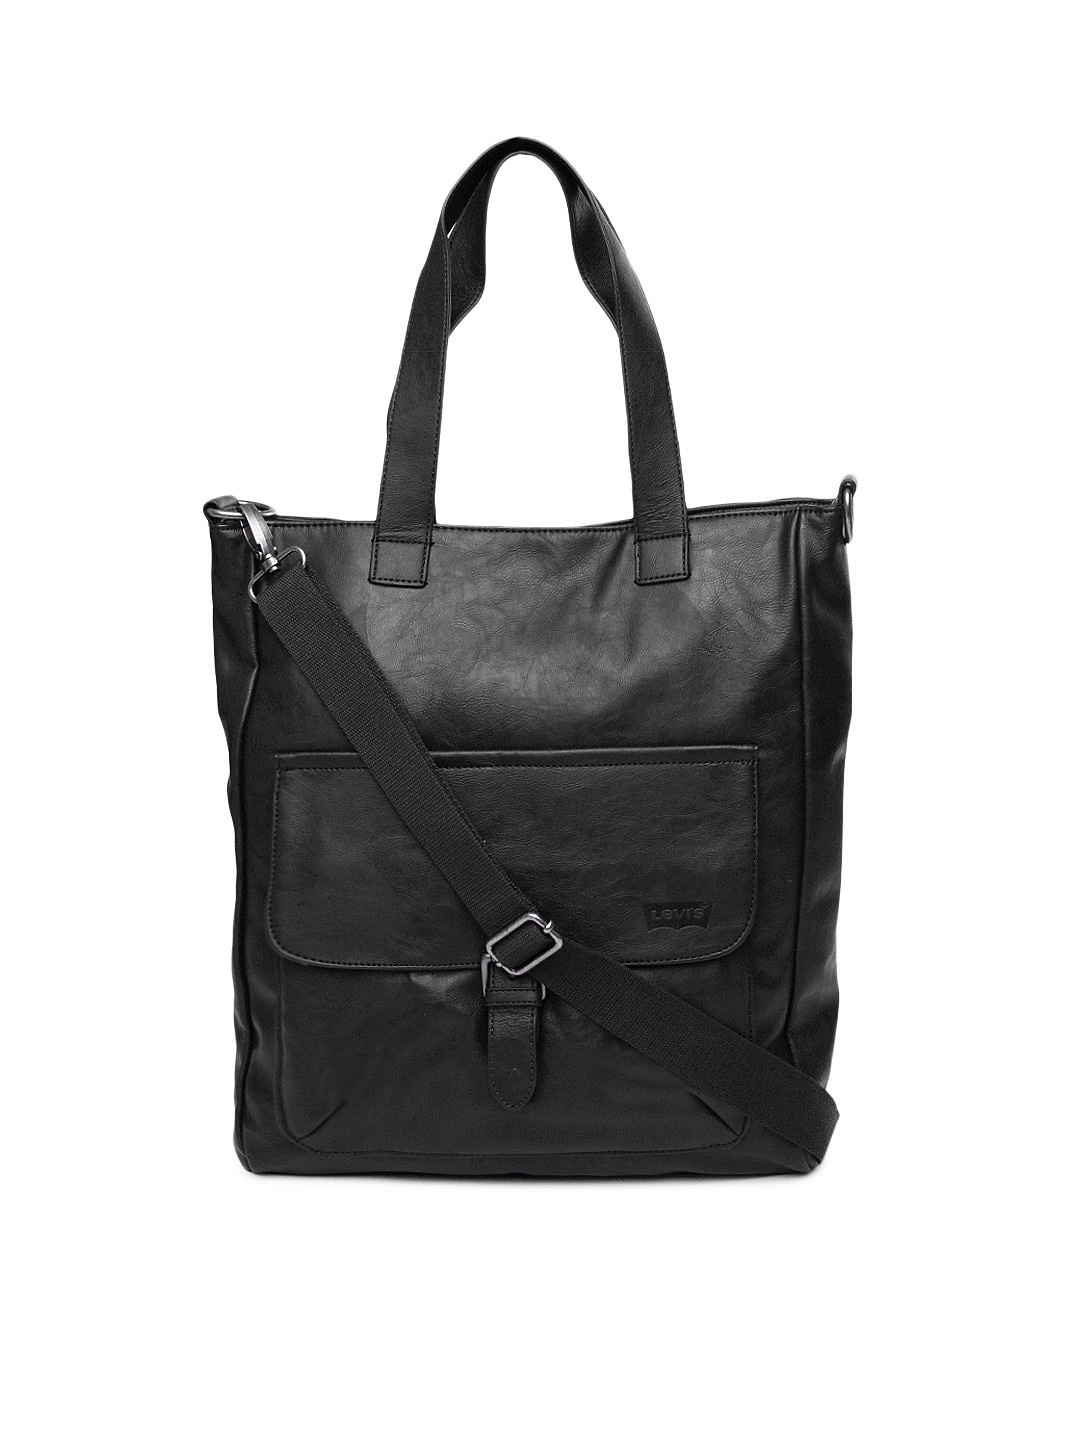 Myntra Levis Unisex Black Tote Bag 267408 | Buy Myntra Levis Tote Bags ...